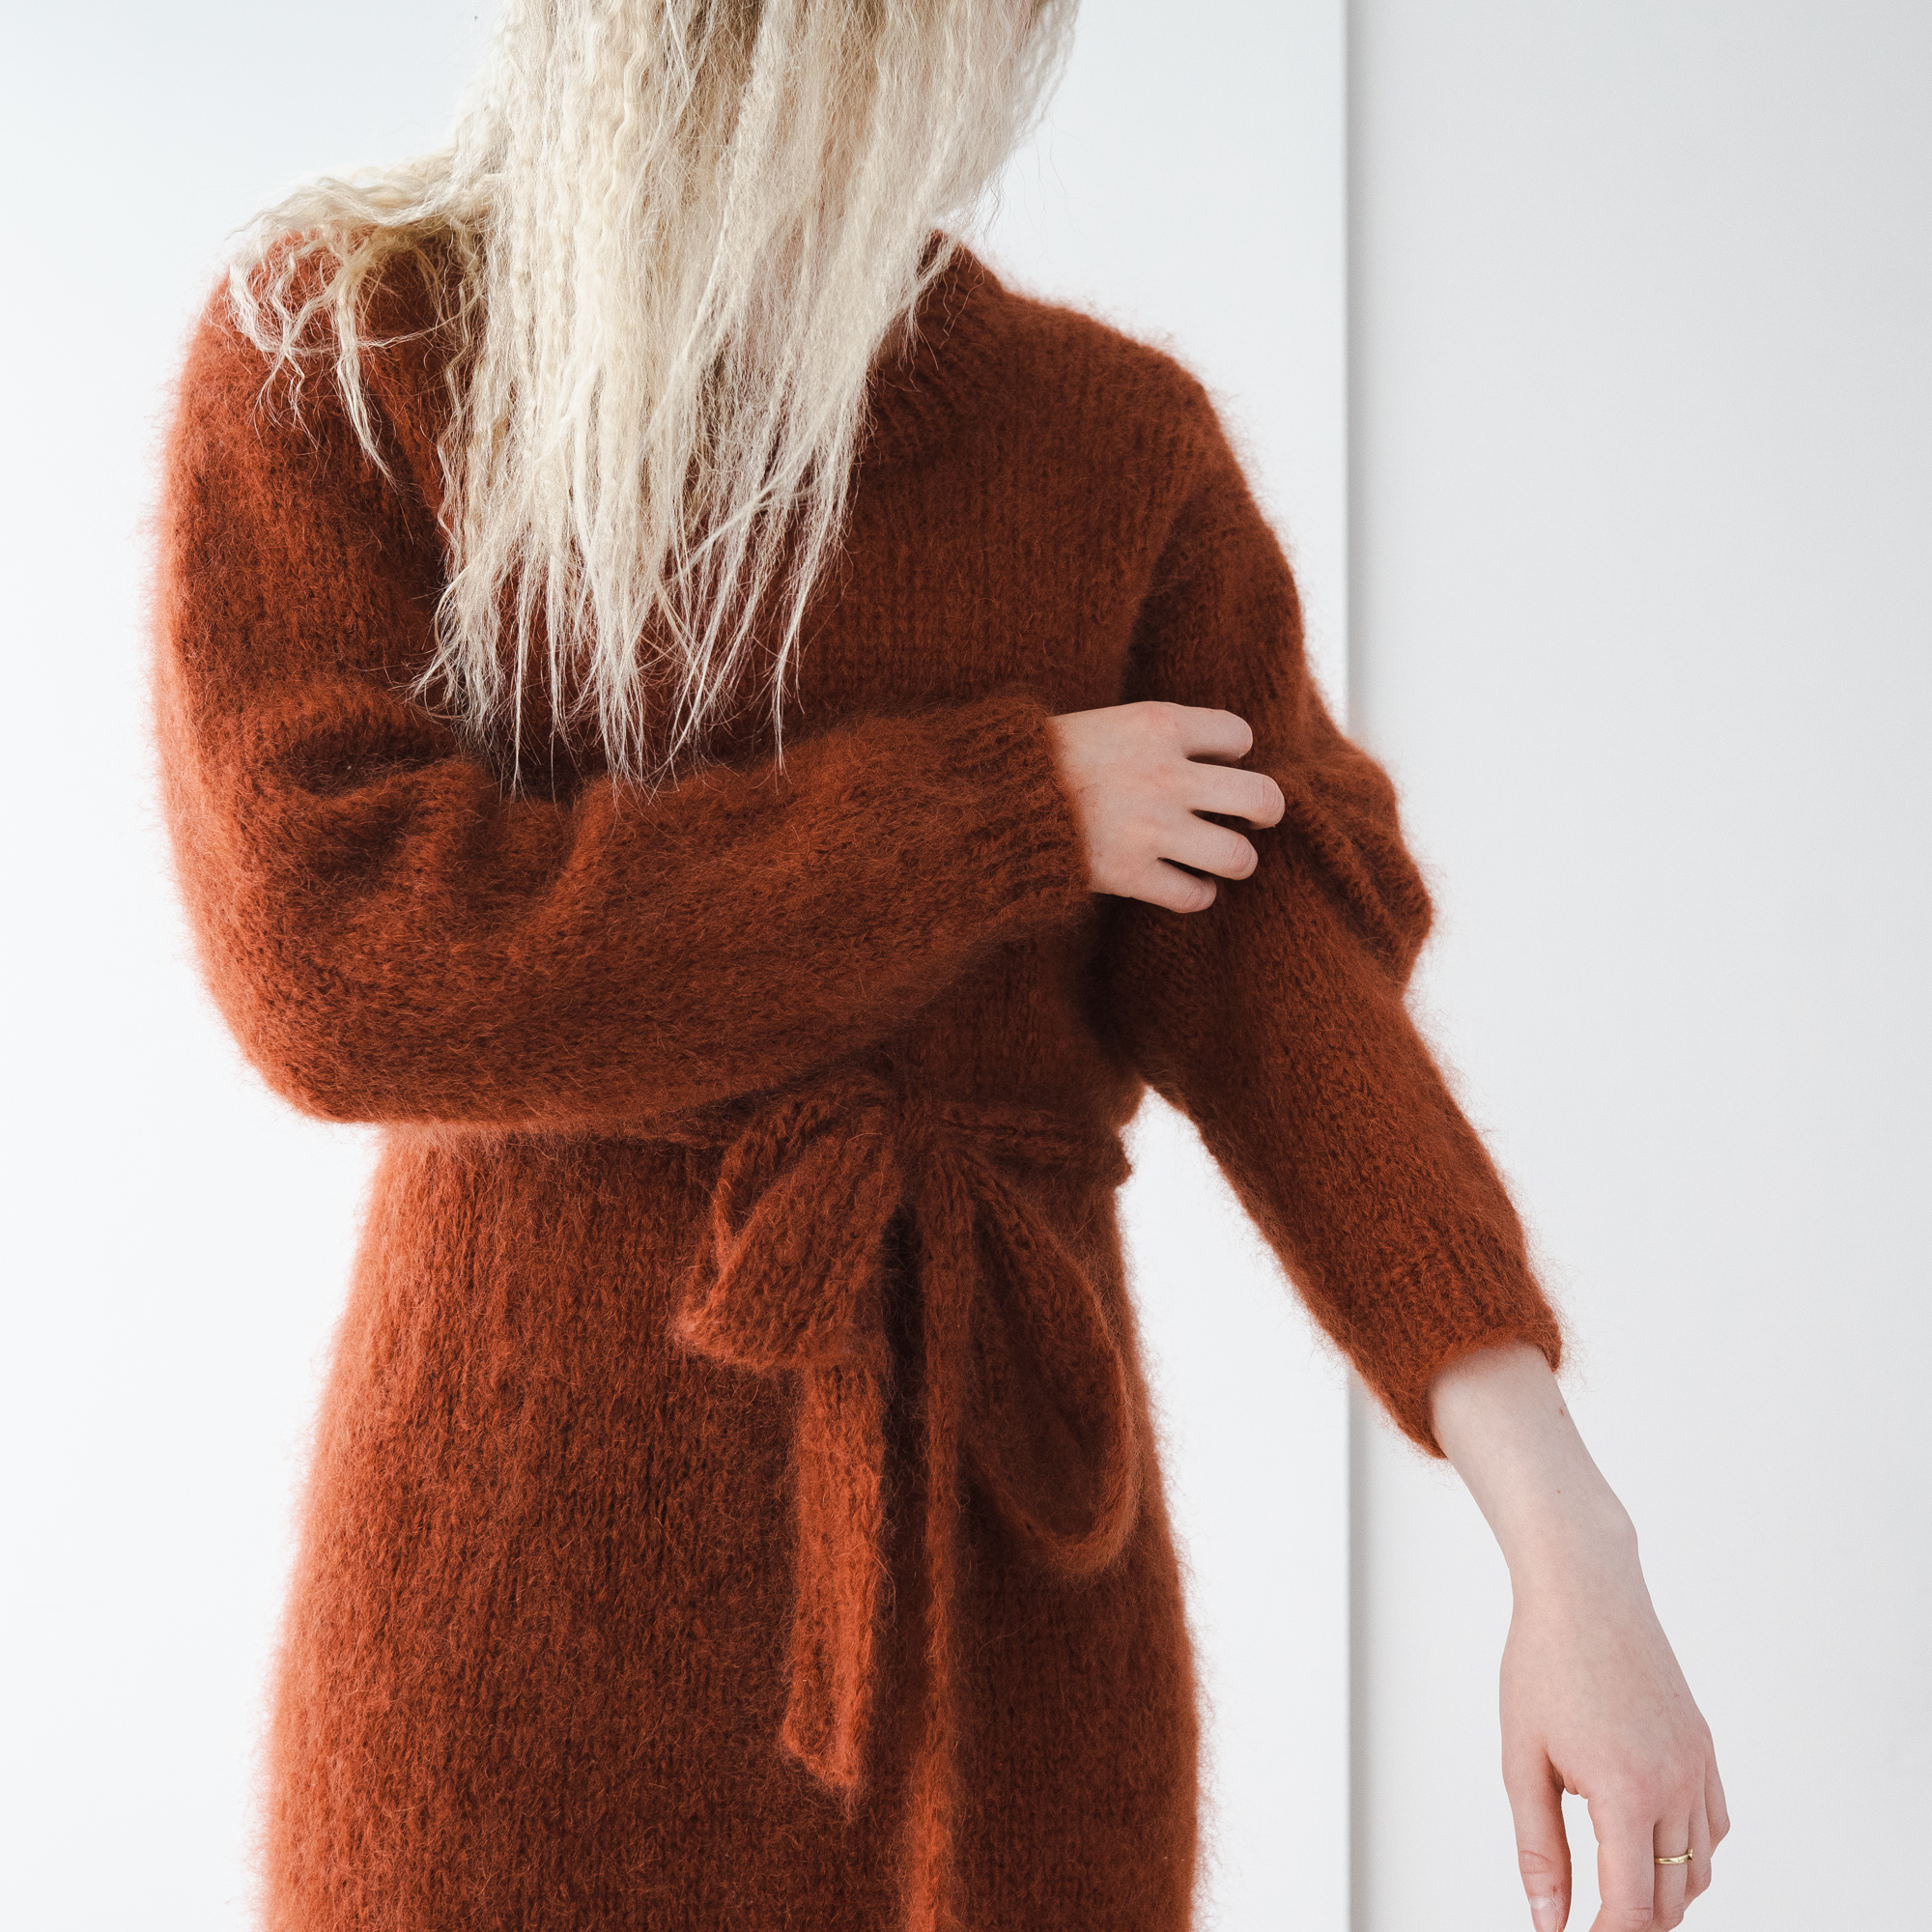  - Relax dress | Knitted dress women kit- by HipKnitShop - 23/11/2020